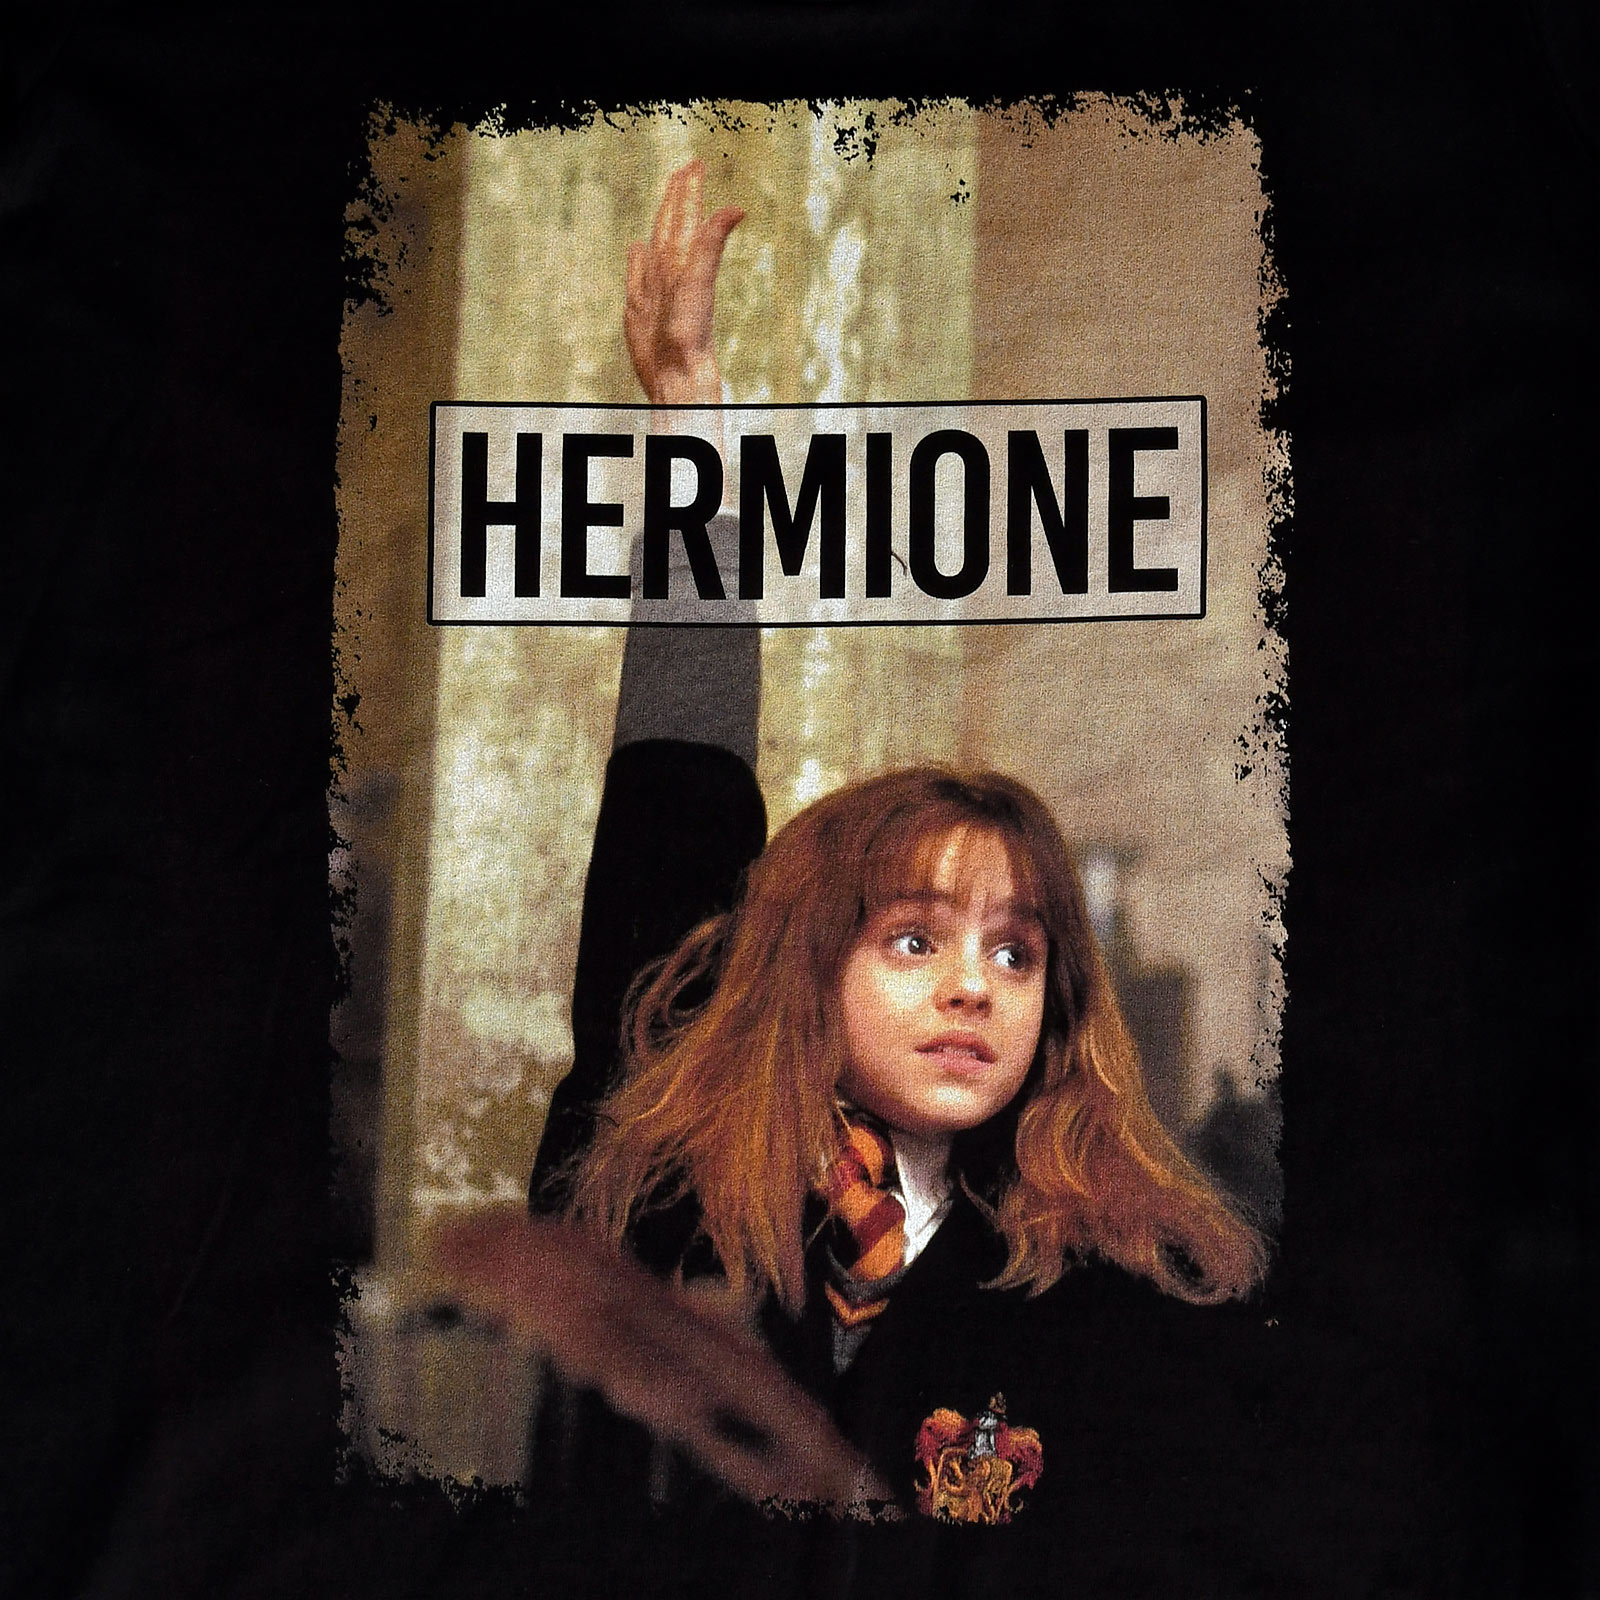 Harry Potter - Hermine Granger T-Shirt Damen schwarz